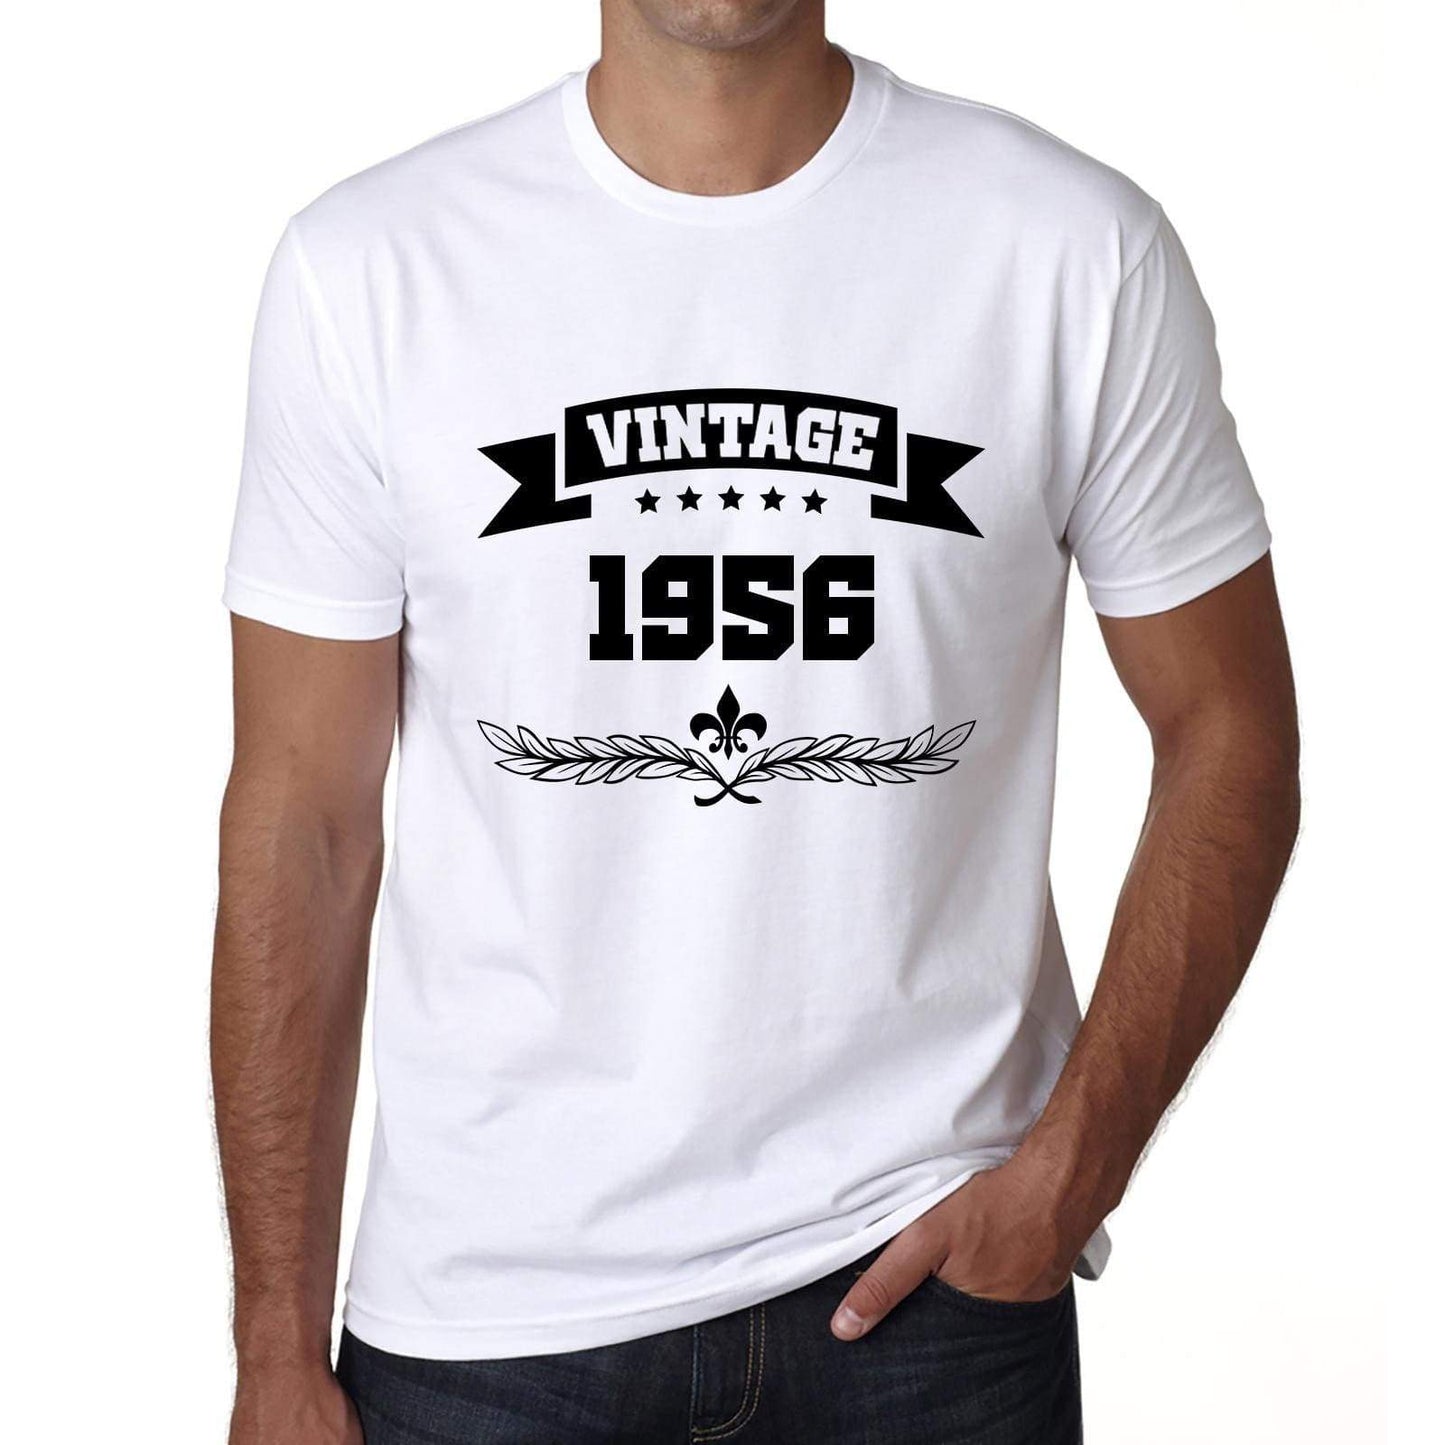 1956 Vintage Year White, Men's Short Sleeve Round Neck T-shirt 00096 ultrabasic-com.myshopify.com